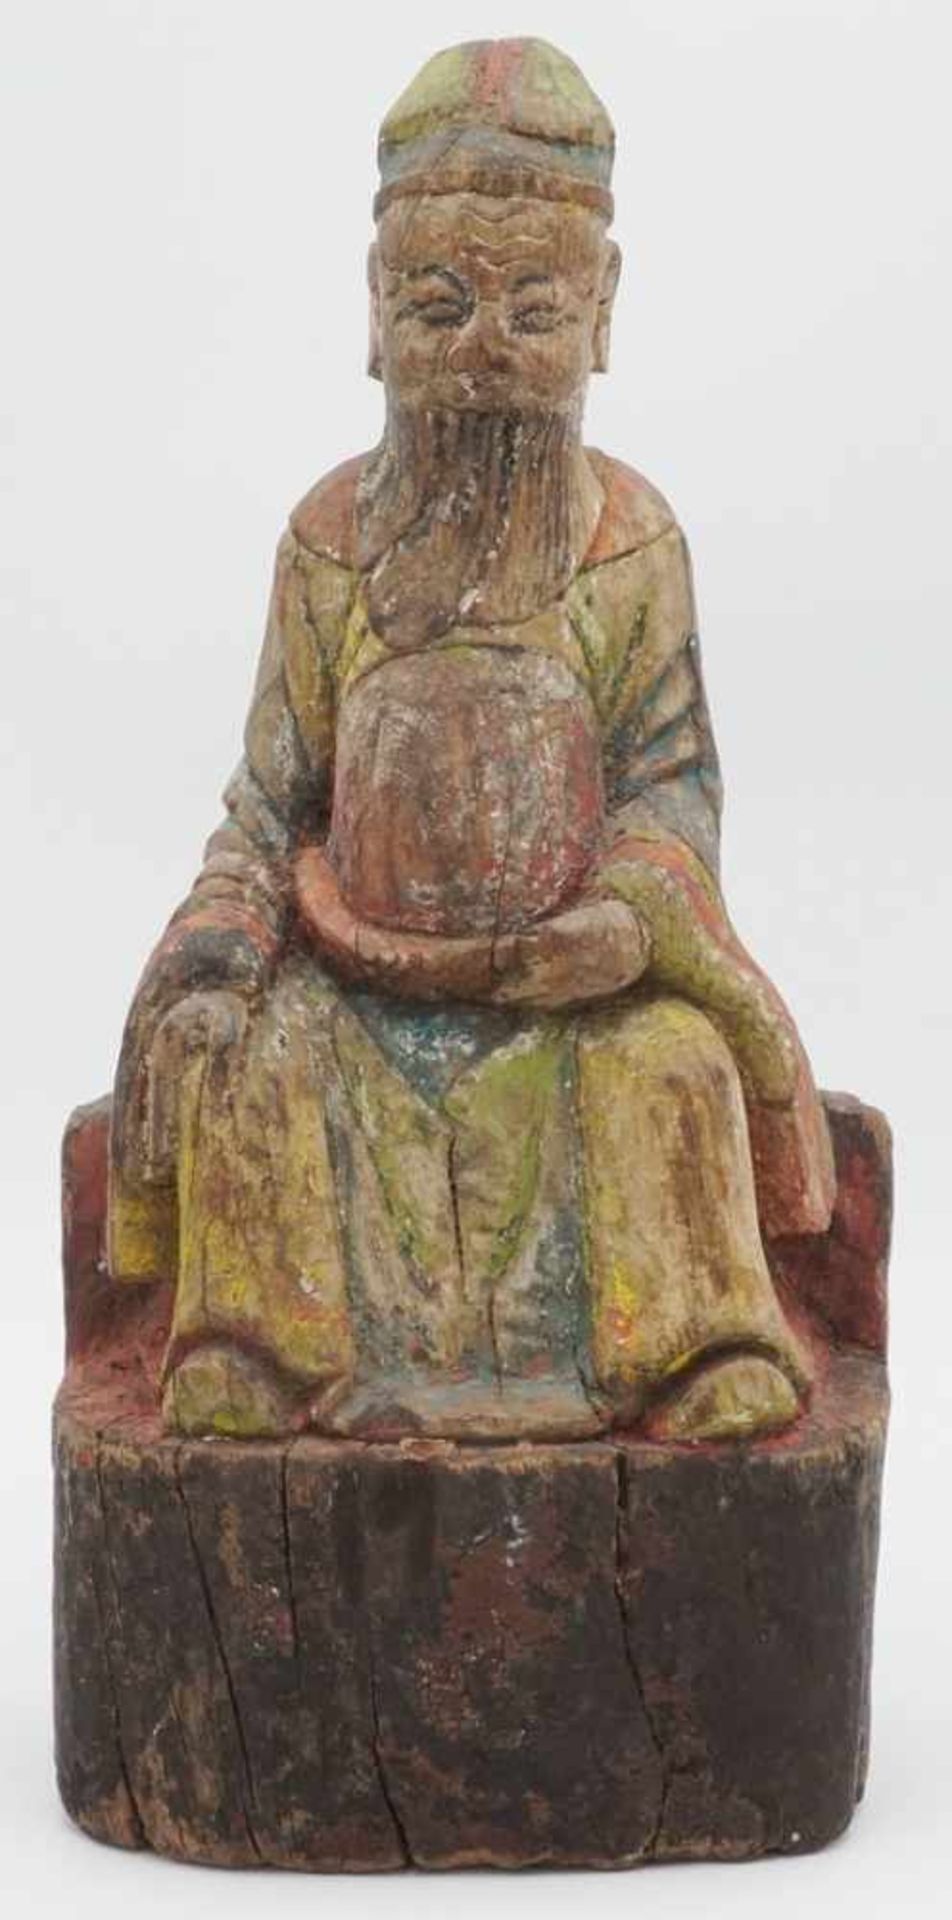 Konfuzius auf Stuhl sitzend, China, 18./19. Jh.Holz, polychrom gefasst, rückseitige Kammer,